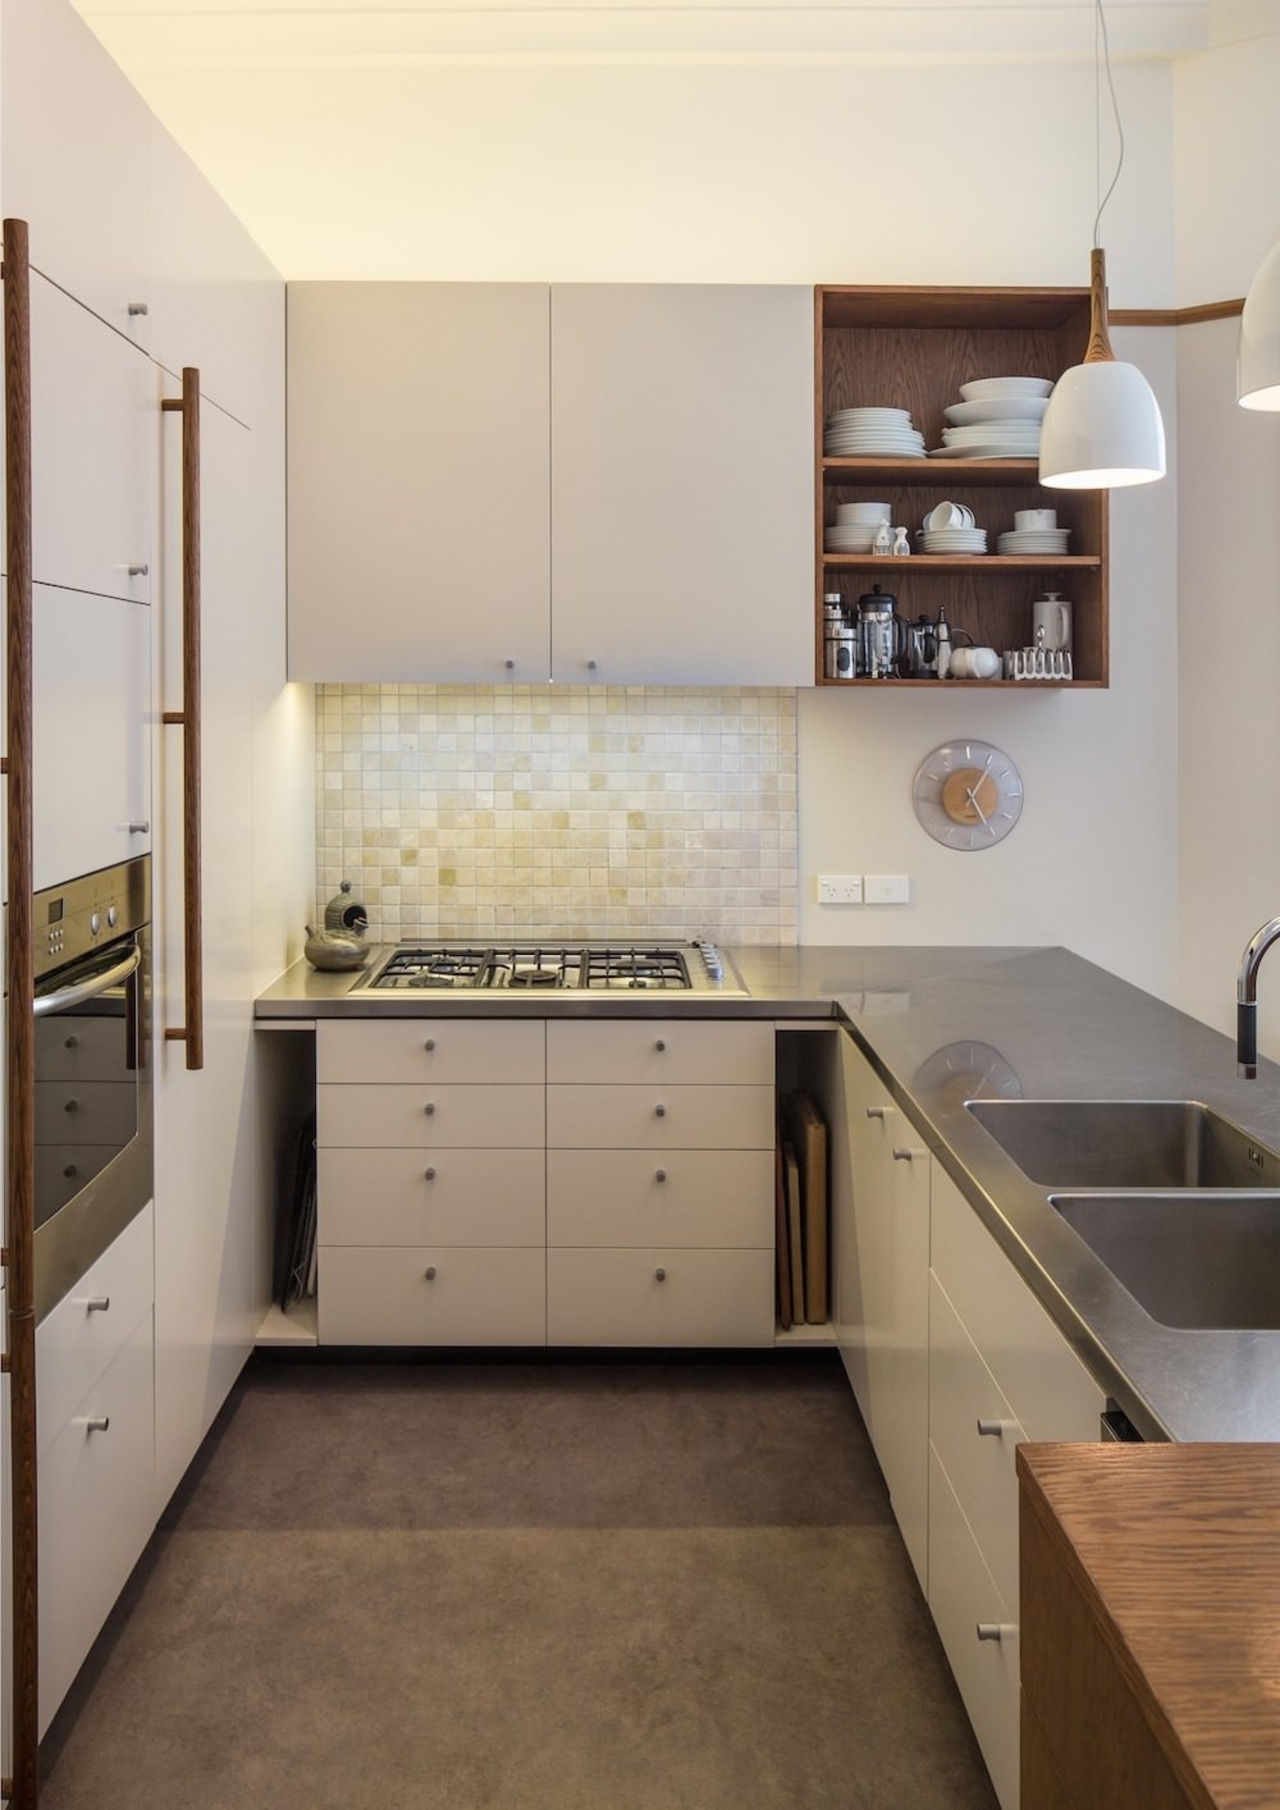 TIDA NZ 2017 – Designer kitchen entrant – cabinetry, countertop, cuisine classique, floor, interior design, kitchen, real estate, room, sink, gray, brown